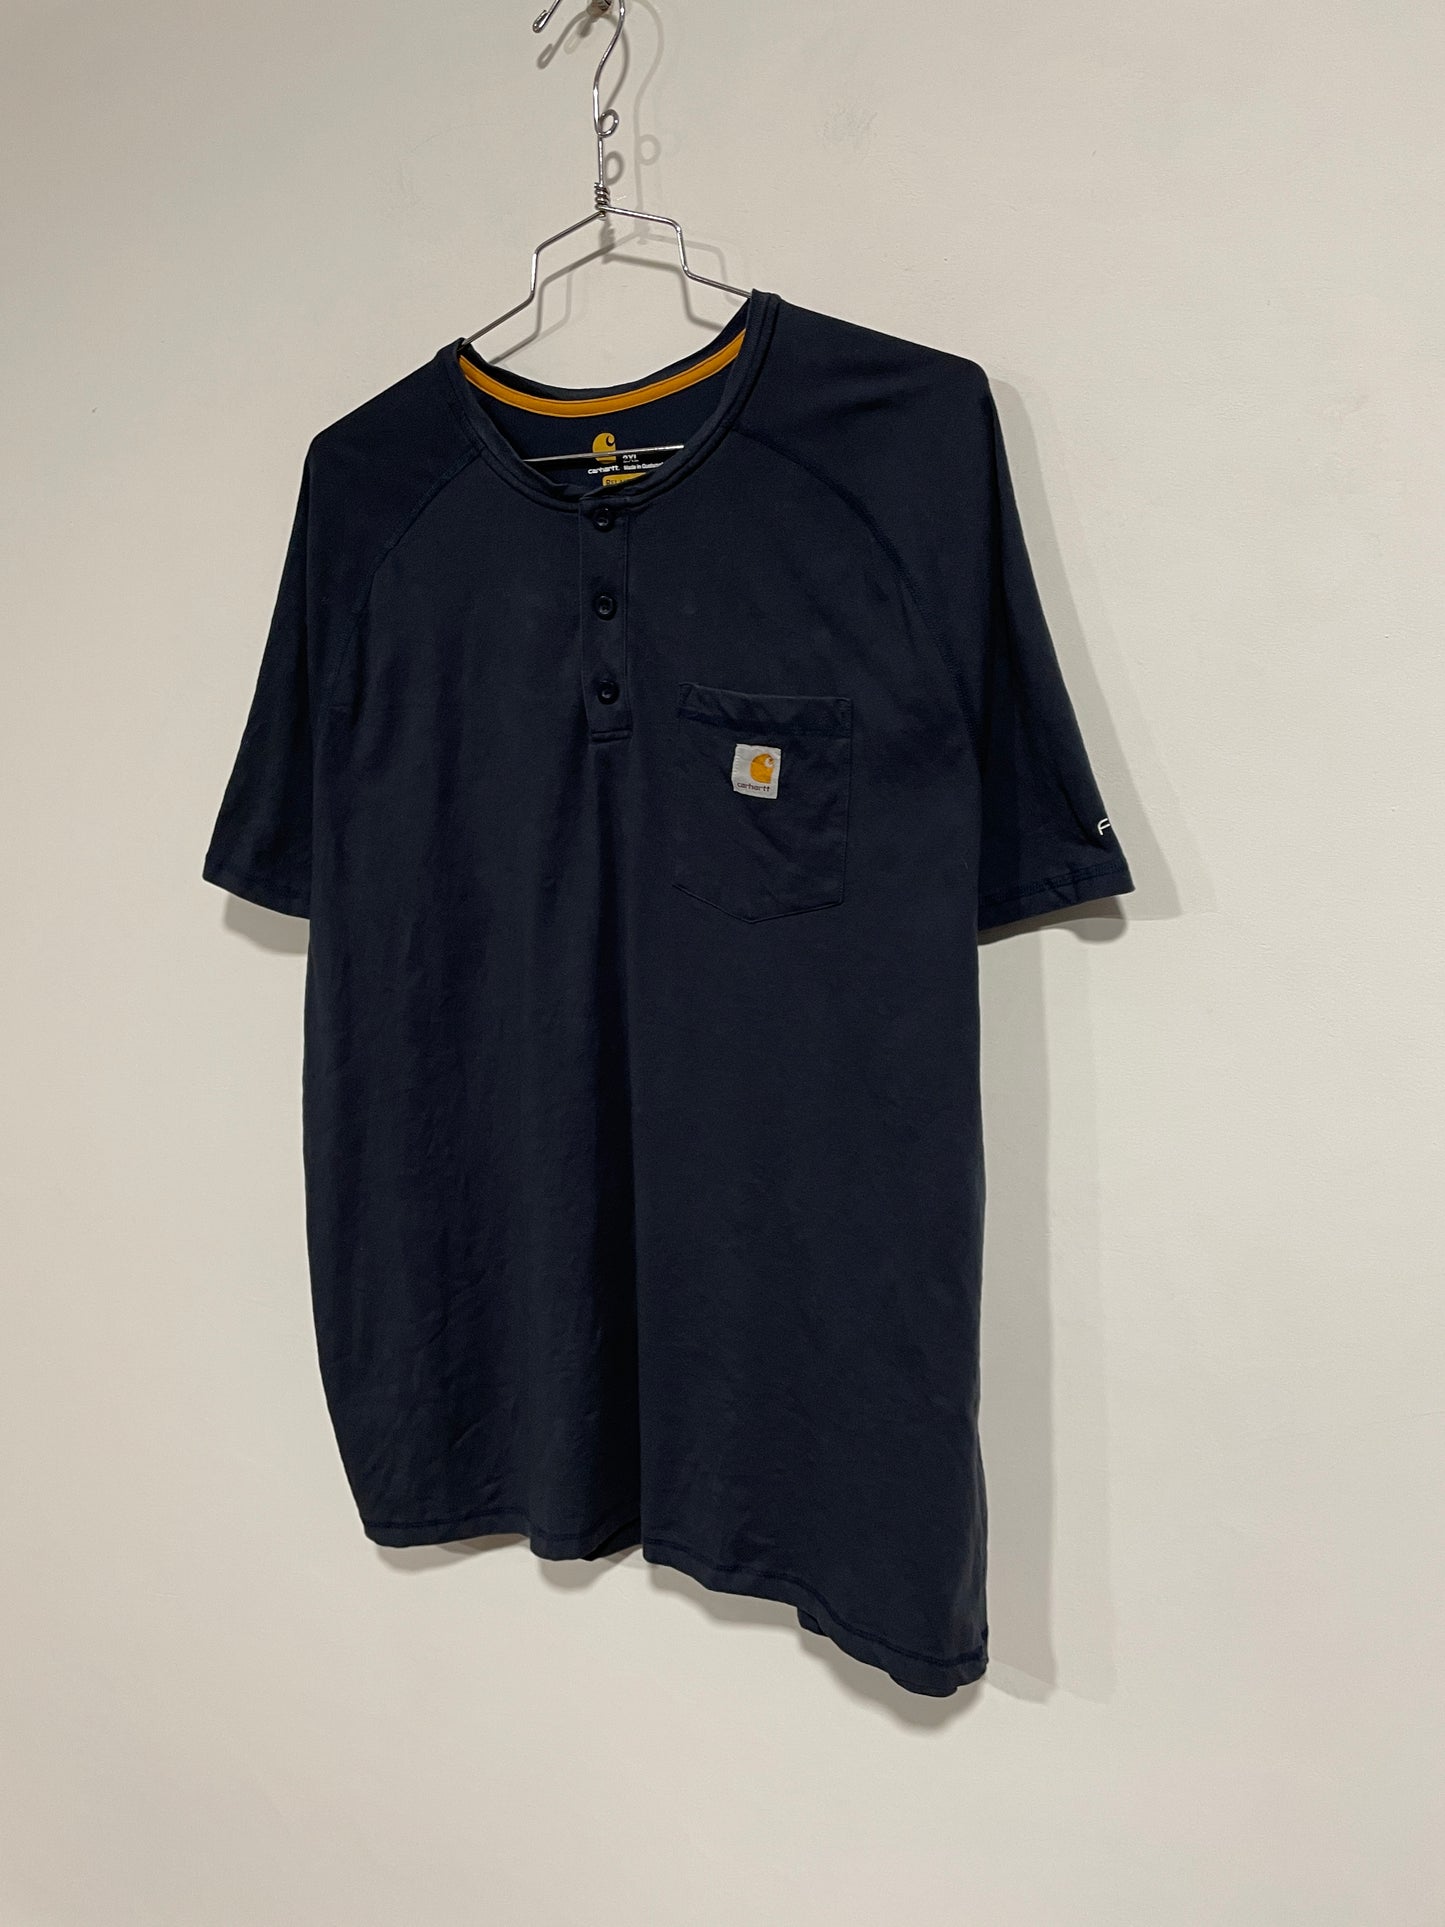 T shirt Carhartt workwear (MR055)